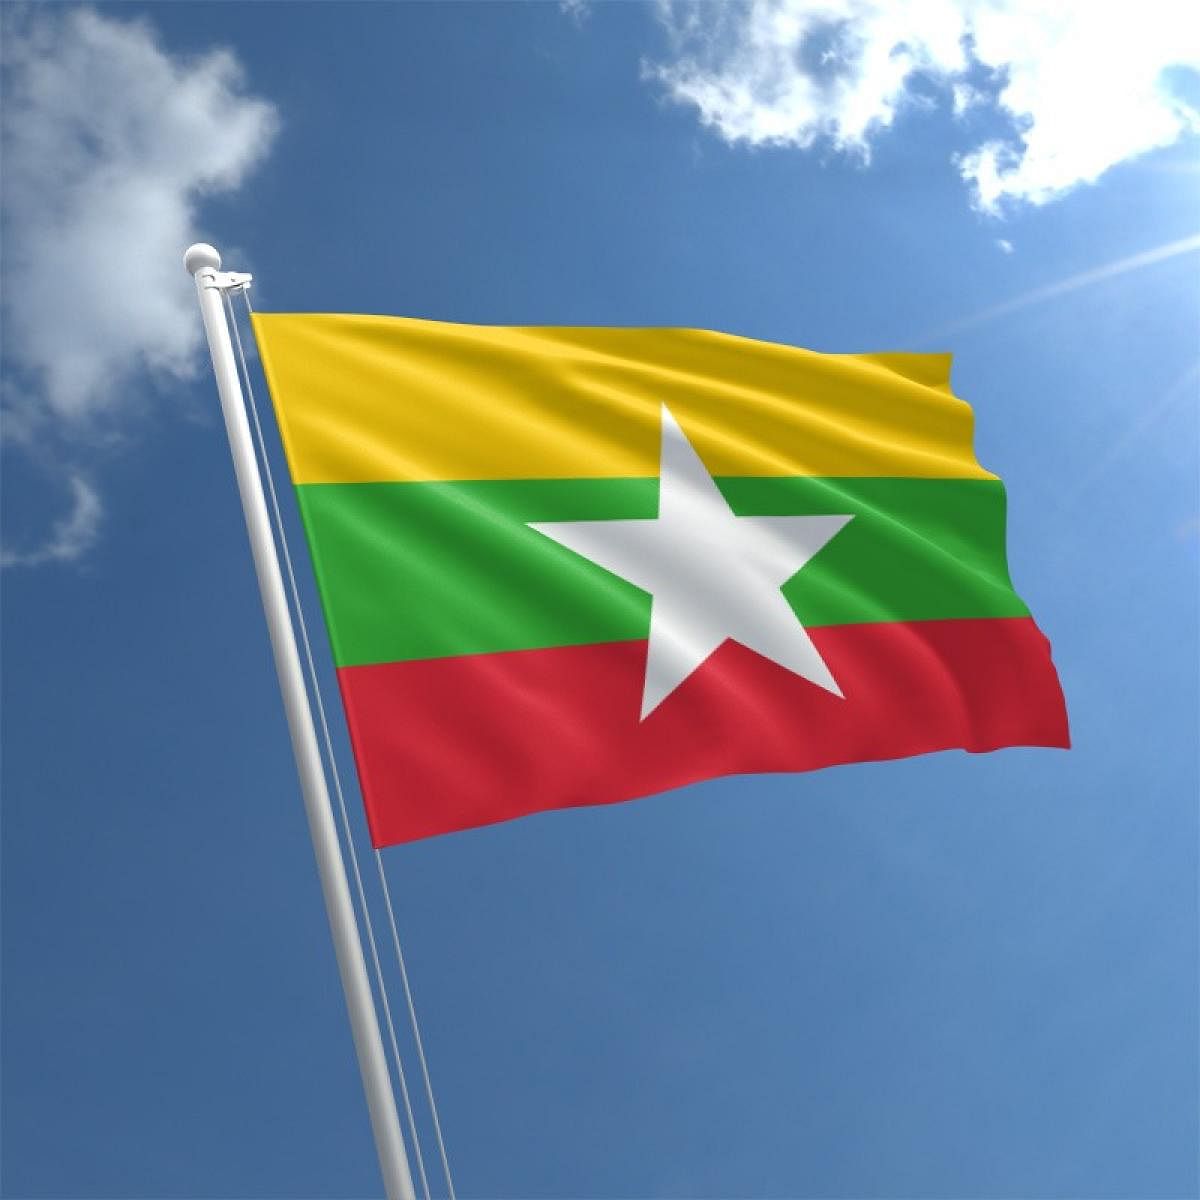 Myanmar flag. (DH Photo)